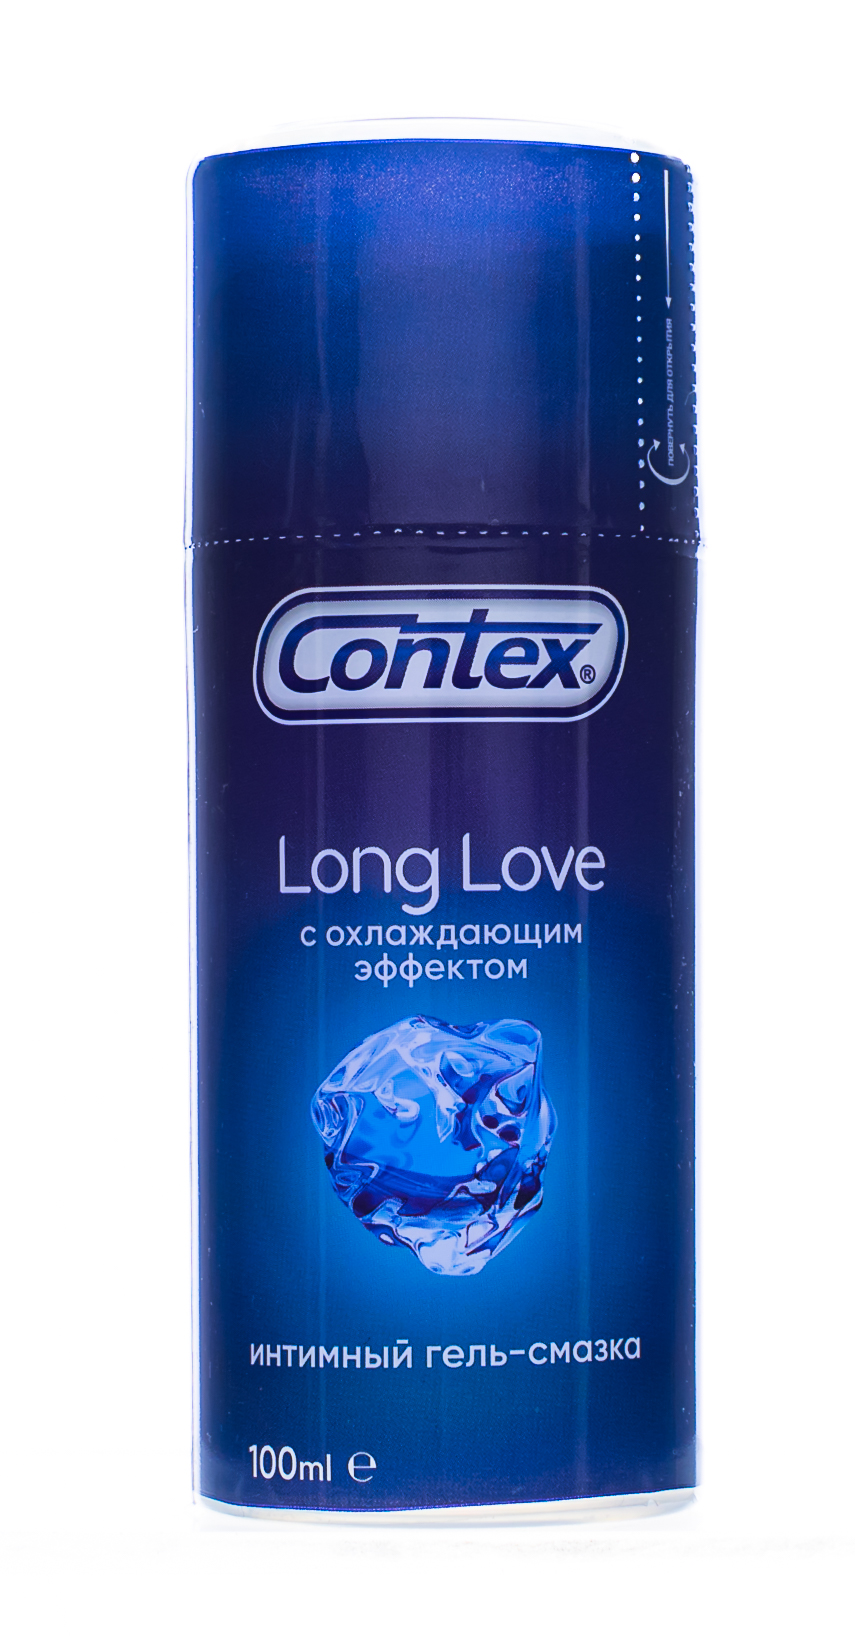 Contex Гель-смазка Long Love продлевающий акт, 100 мл (Contex, Гель-смазка)